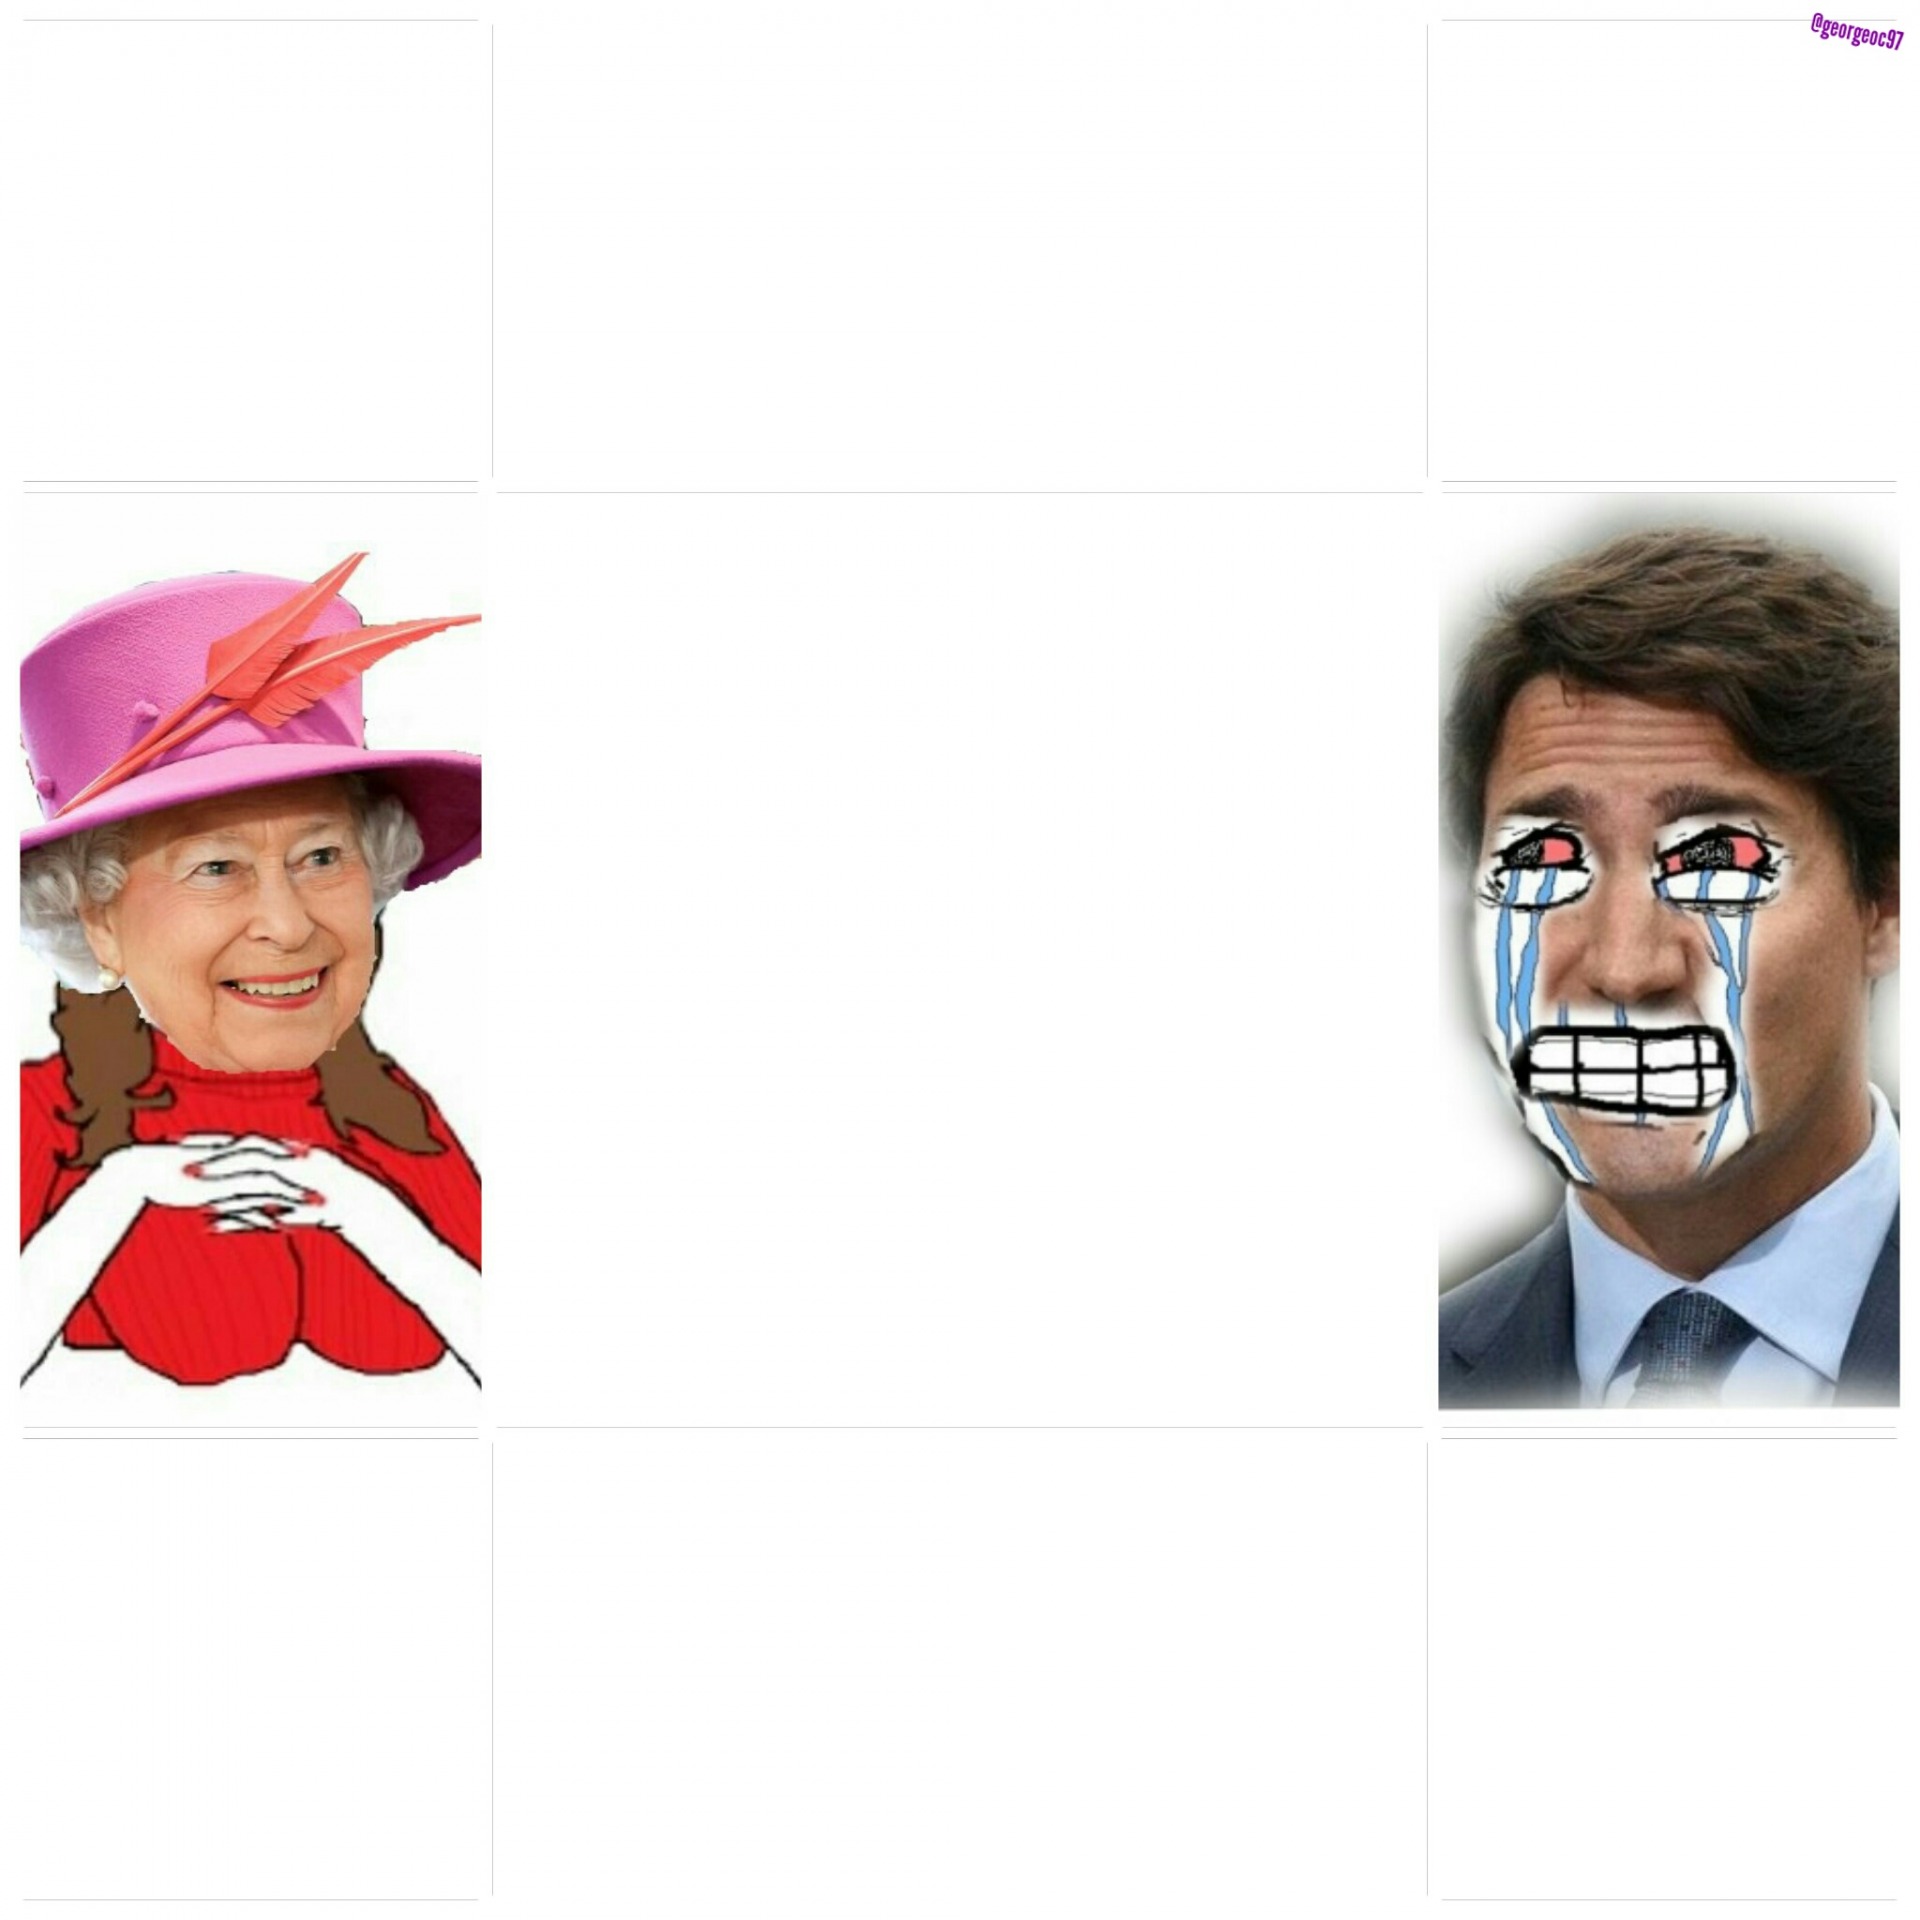 Dick stomp queen Vs soyboy Trudeau Blank Meme Template